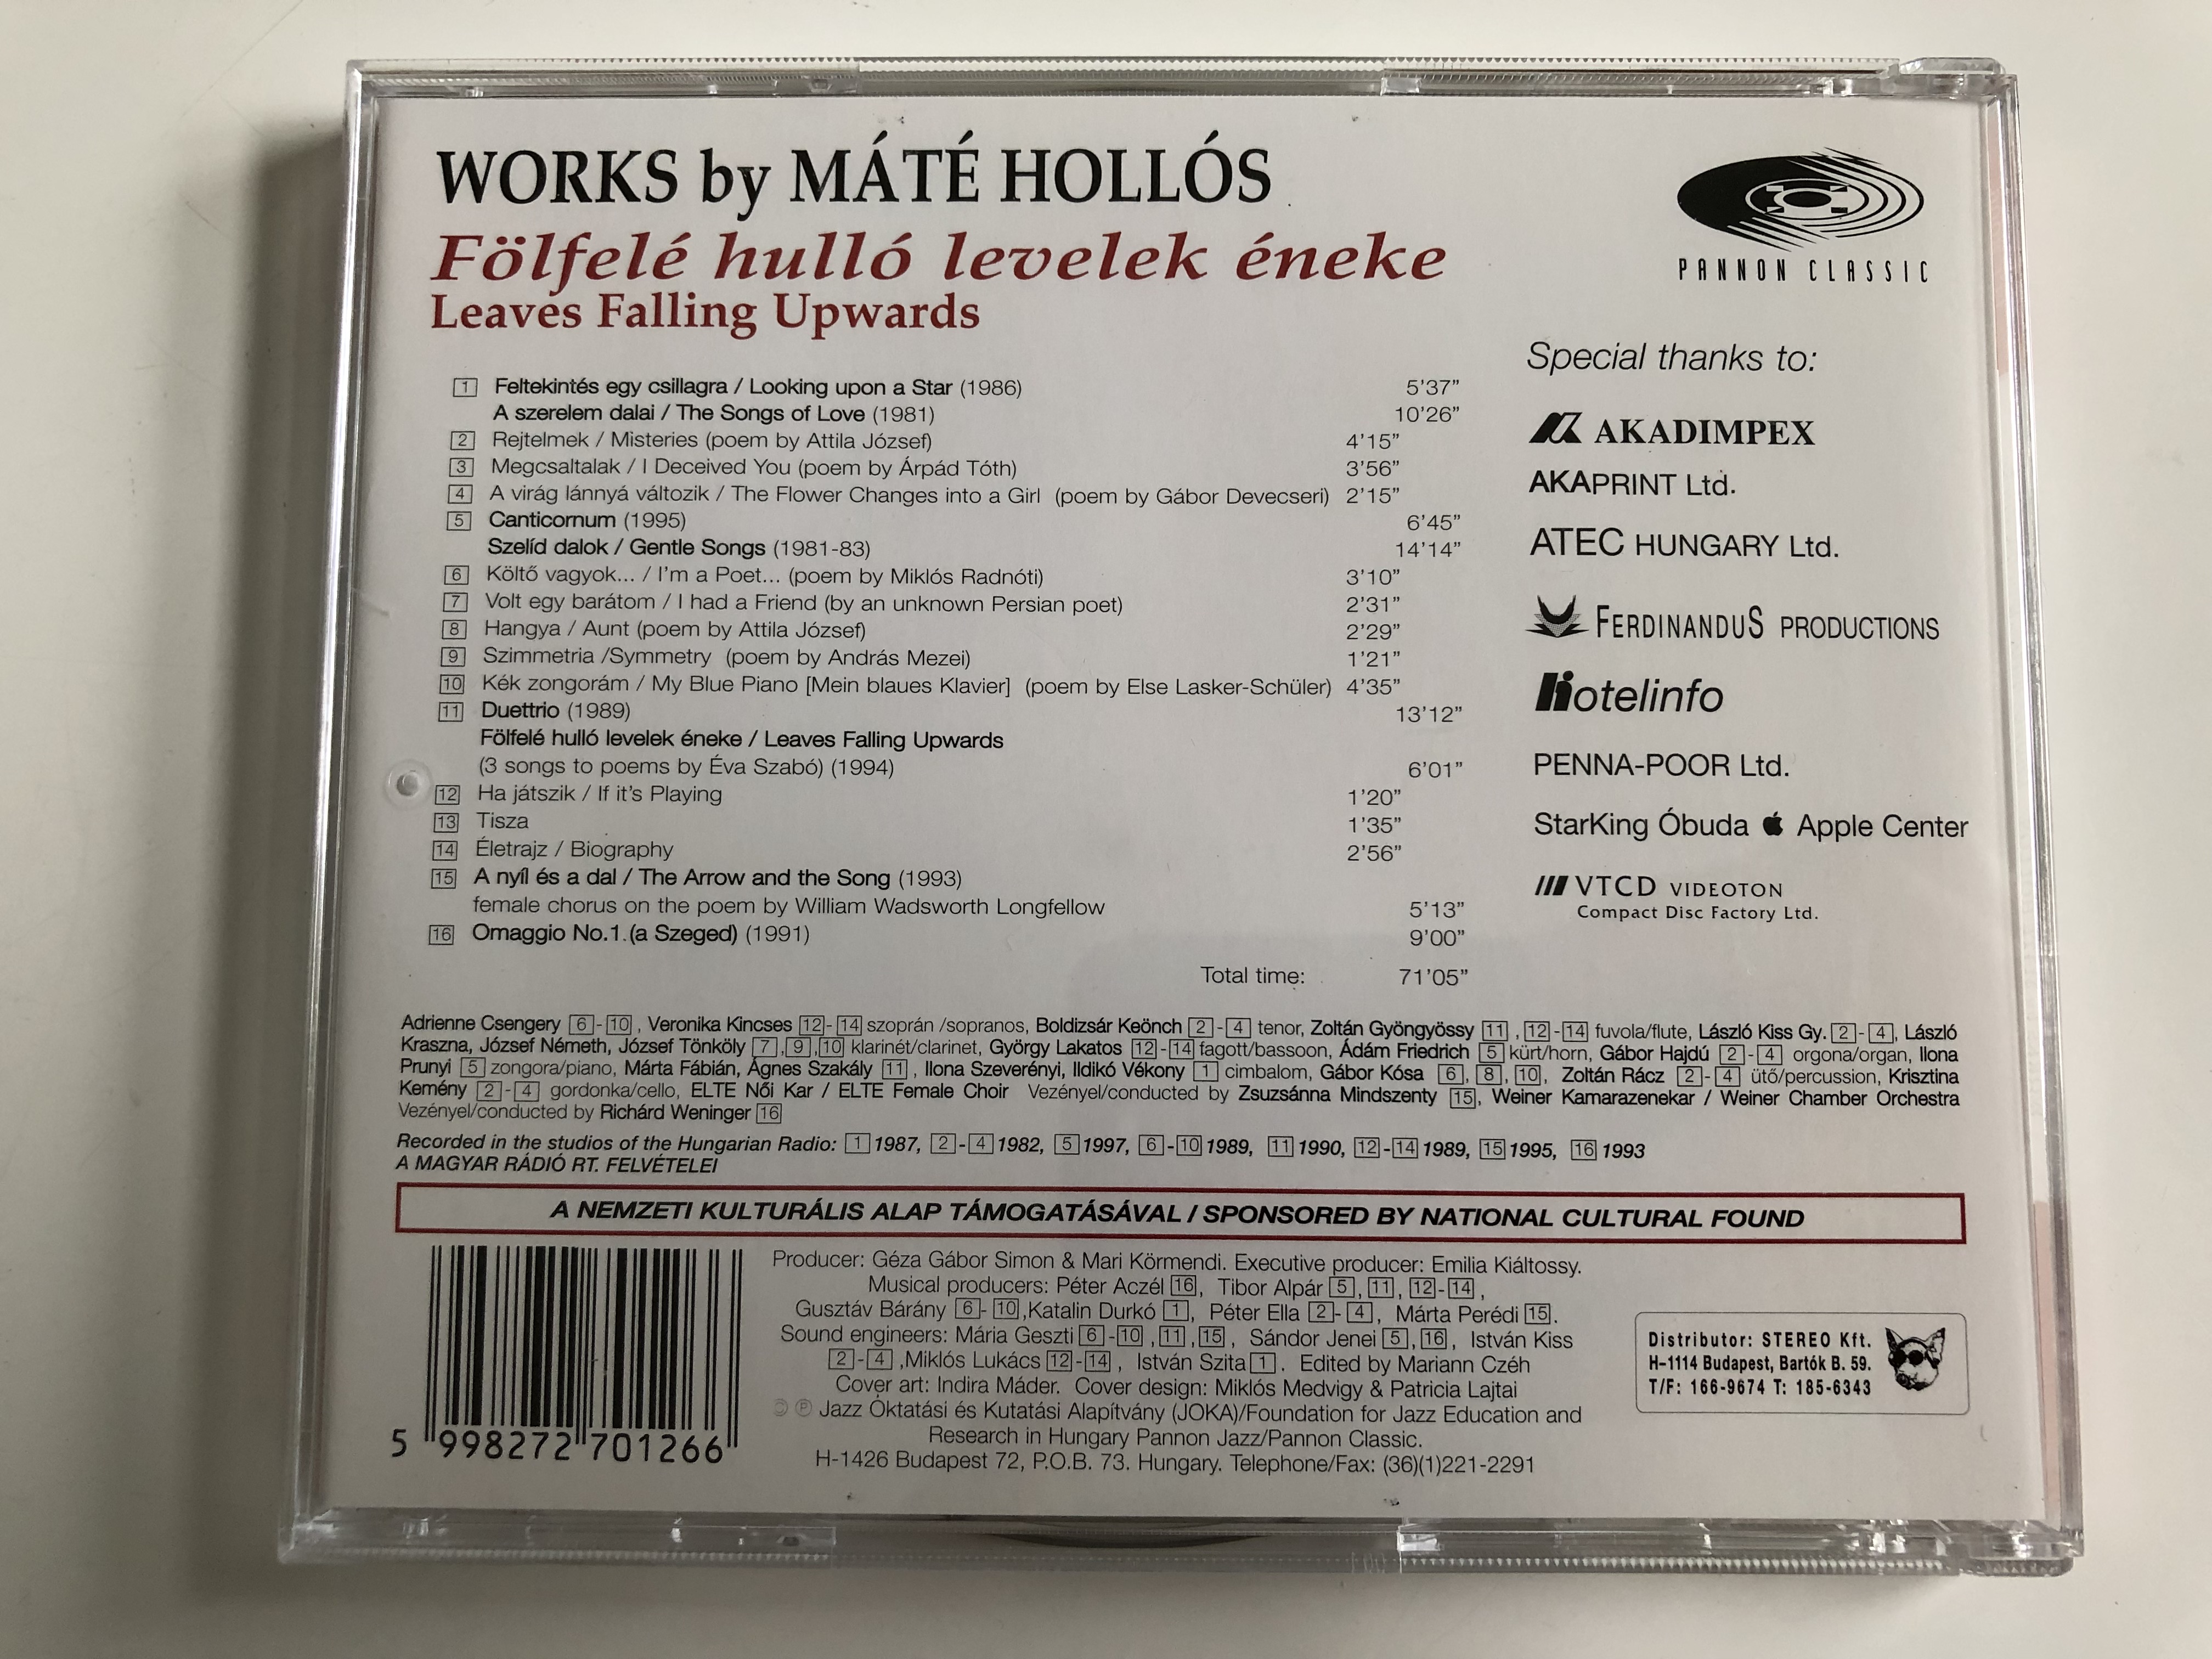 works-by-mate-hollos-folfele-hullo-levelek-eneke-leaves-falling-upwards-pannon-classic-audio-cd-1997-pcl-8006-6-.jpg